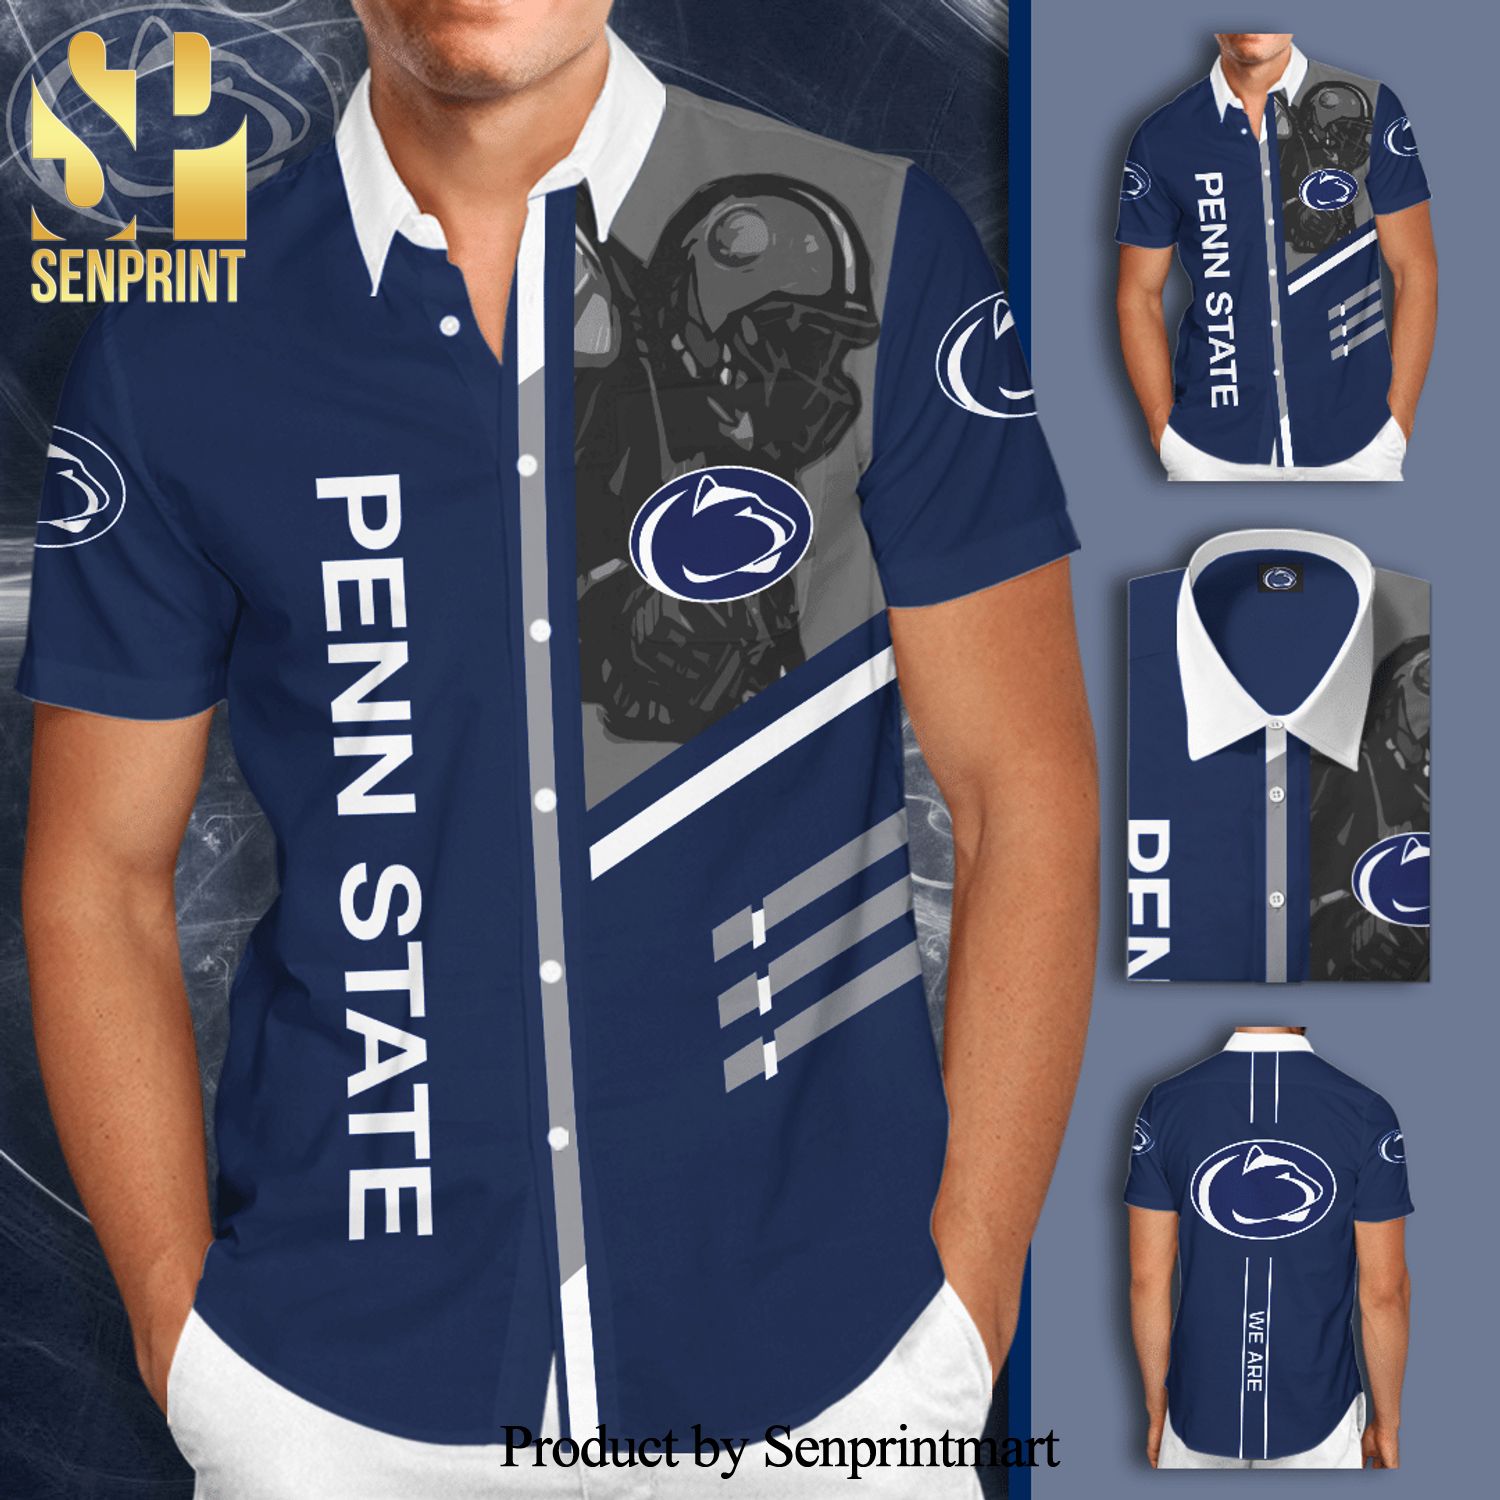 Penn State Nittany Lions Full Printing Short Sleeve Dress Shirt Hawaiian Summer Aloha Beach Shirt – Navy